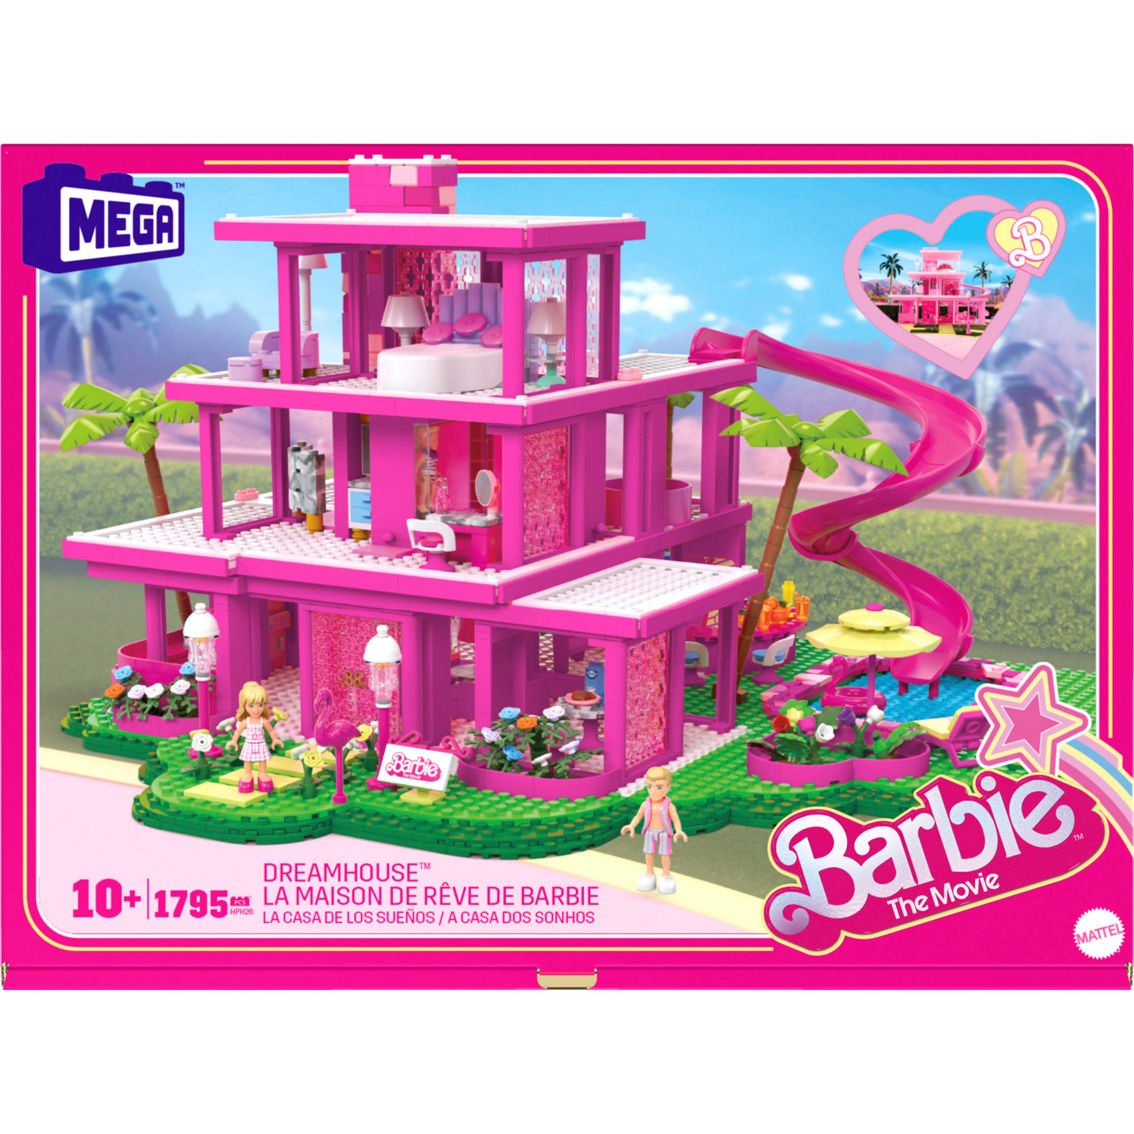 BARBIE: THE MOVIE MEGA DREAMHOUSE PLAYSET - The Toy Insider